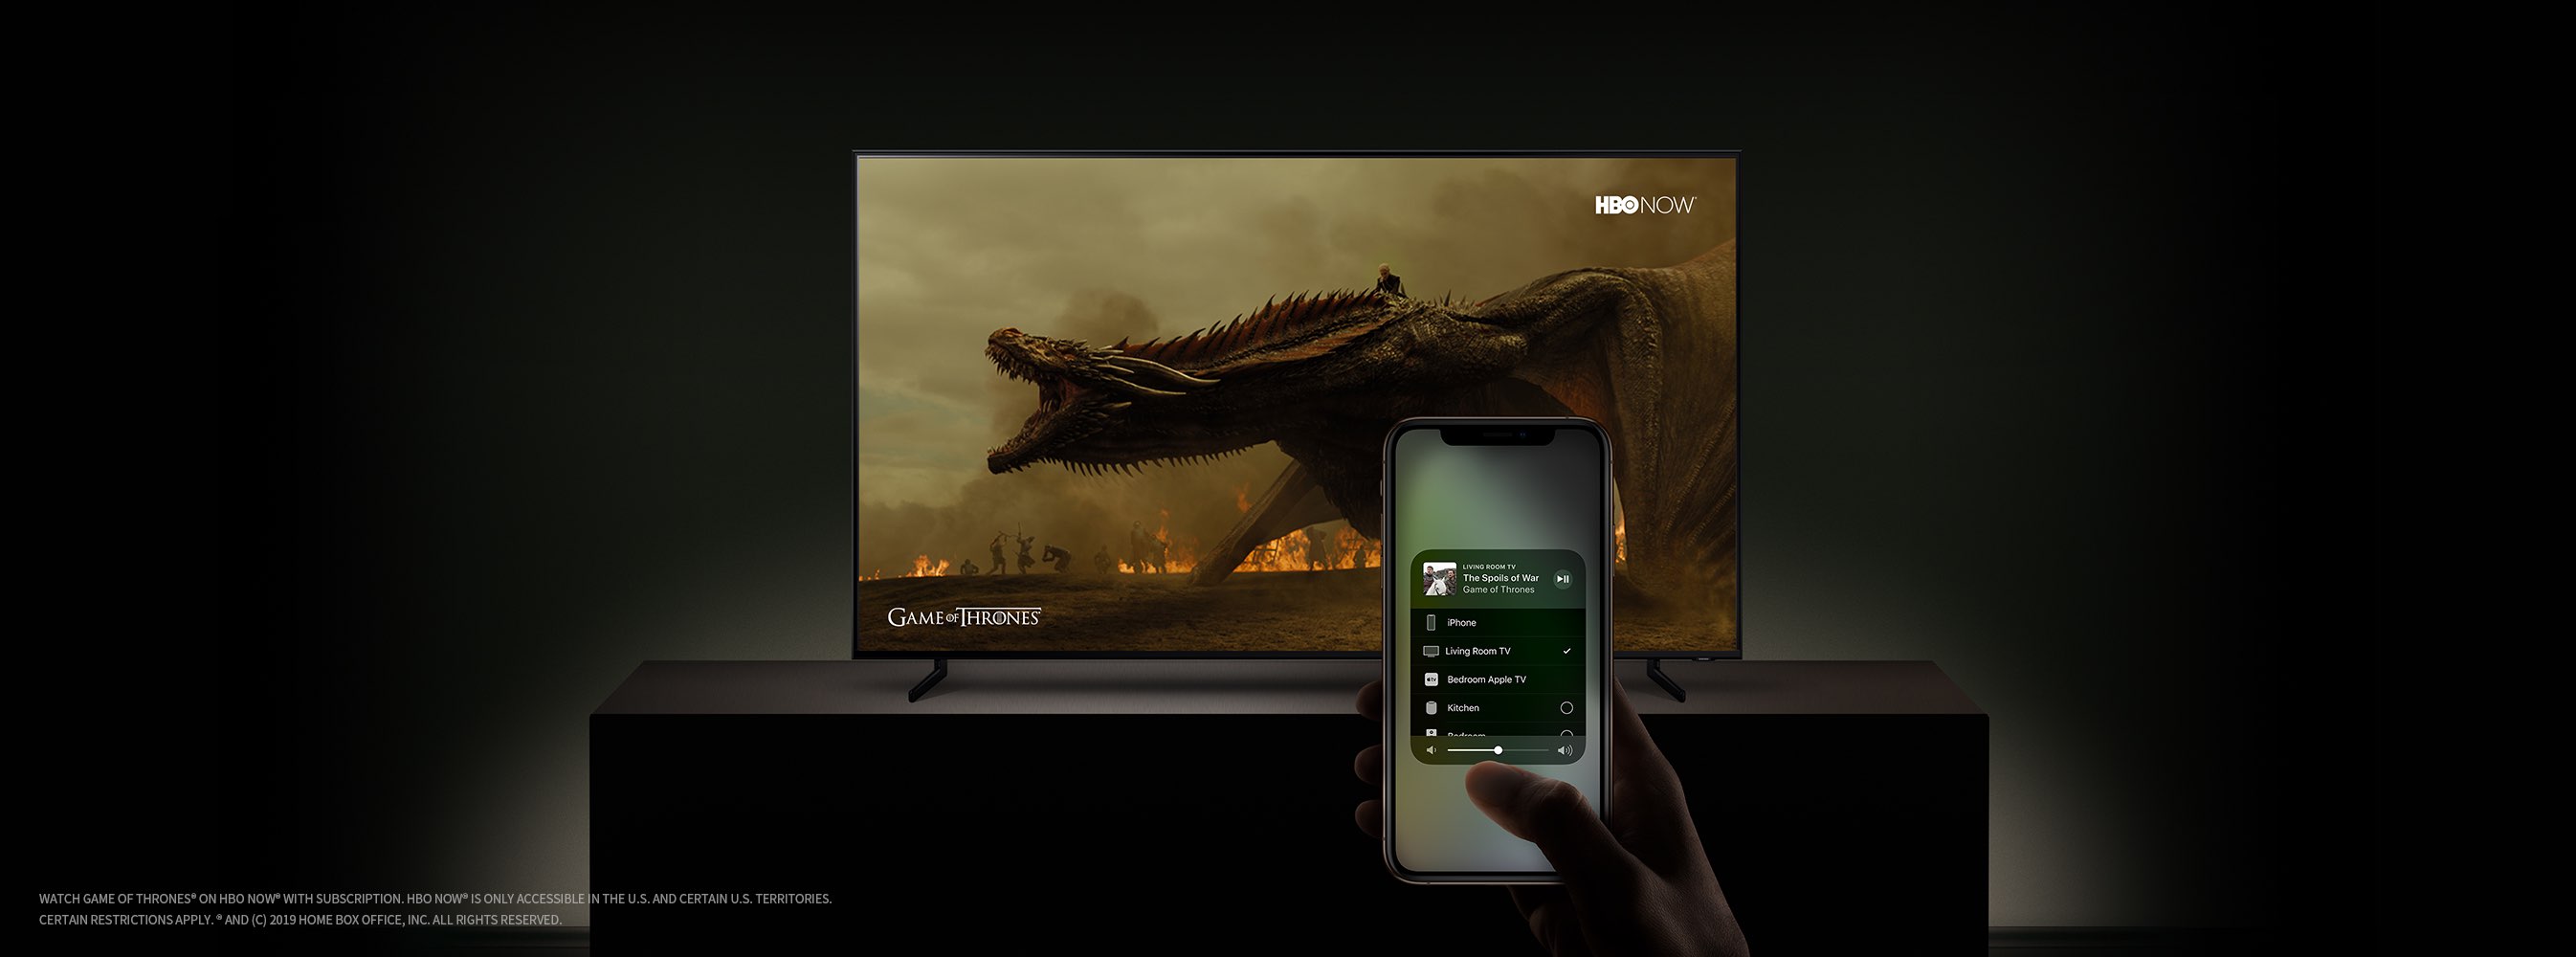 Samsung-smart-TV_Airplay-2